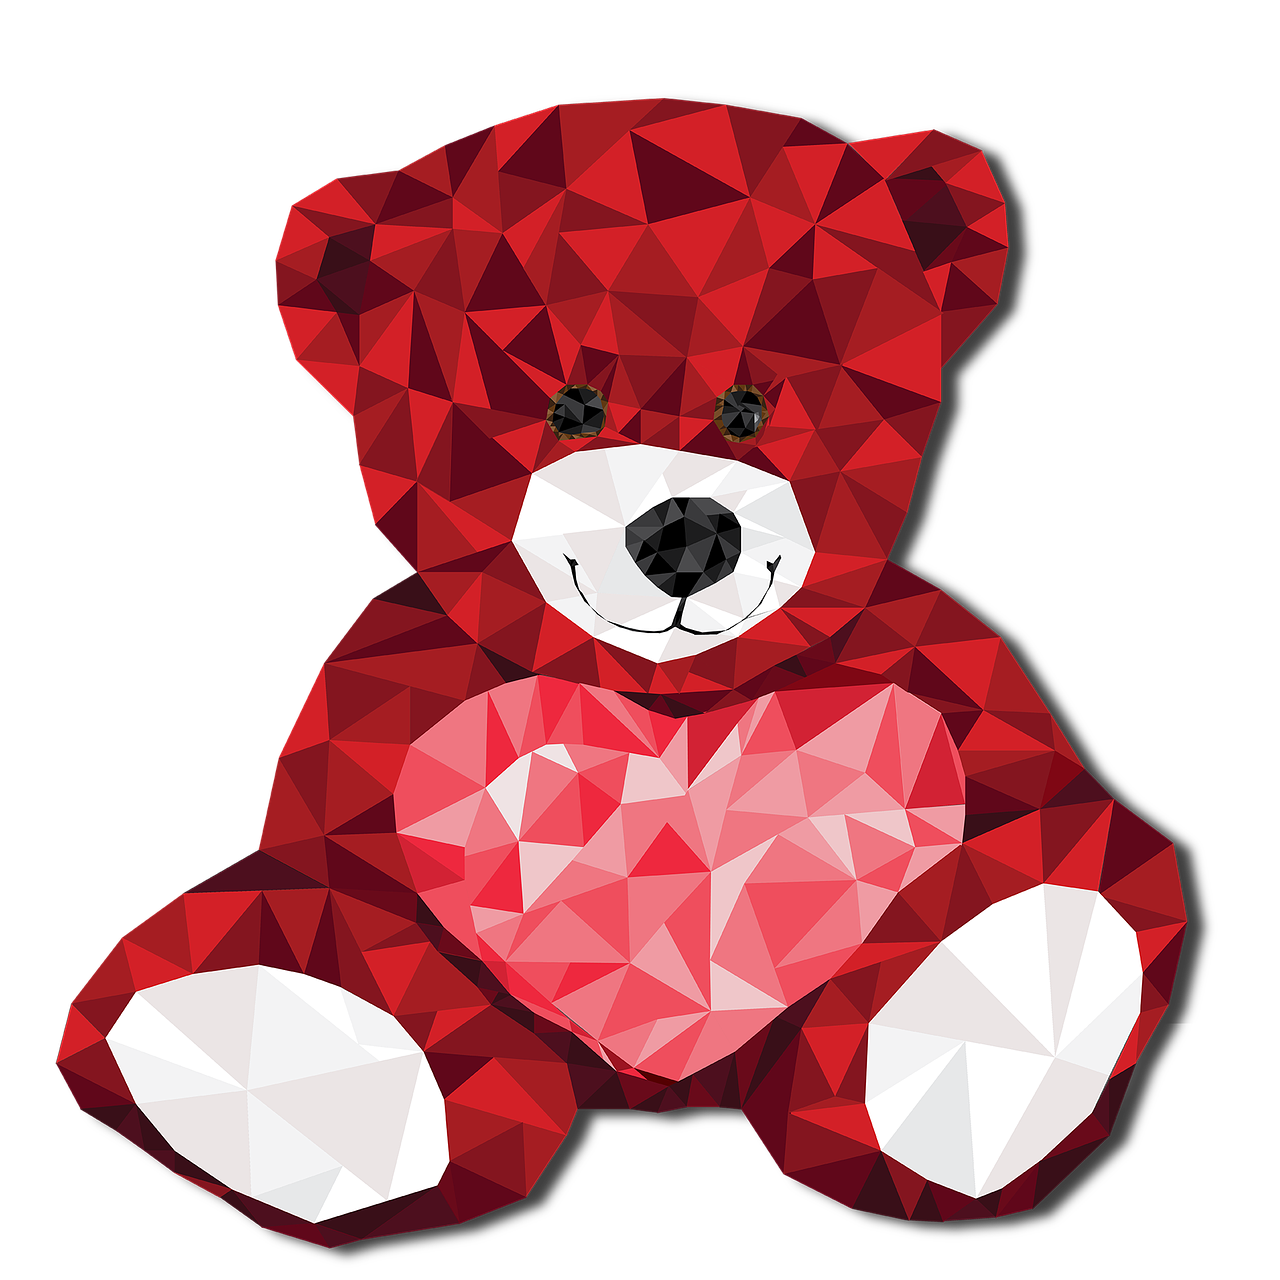 teddy bear website